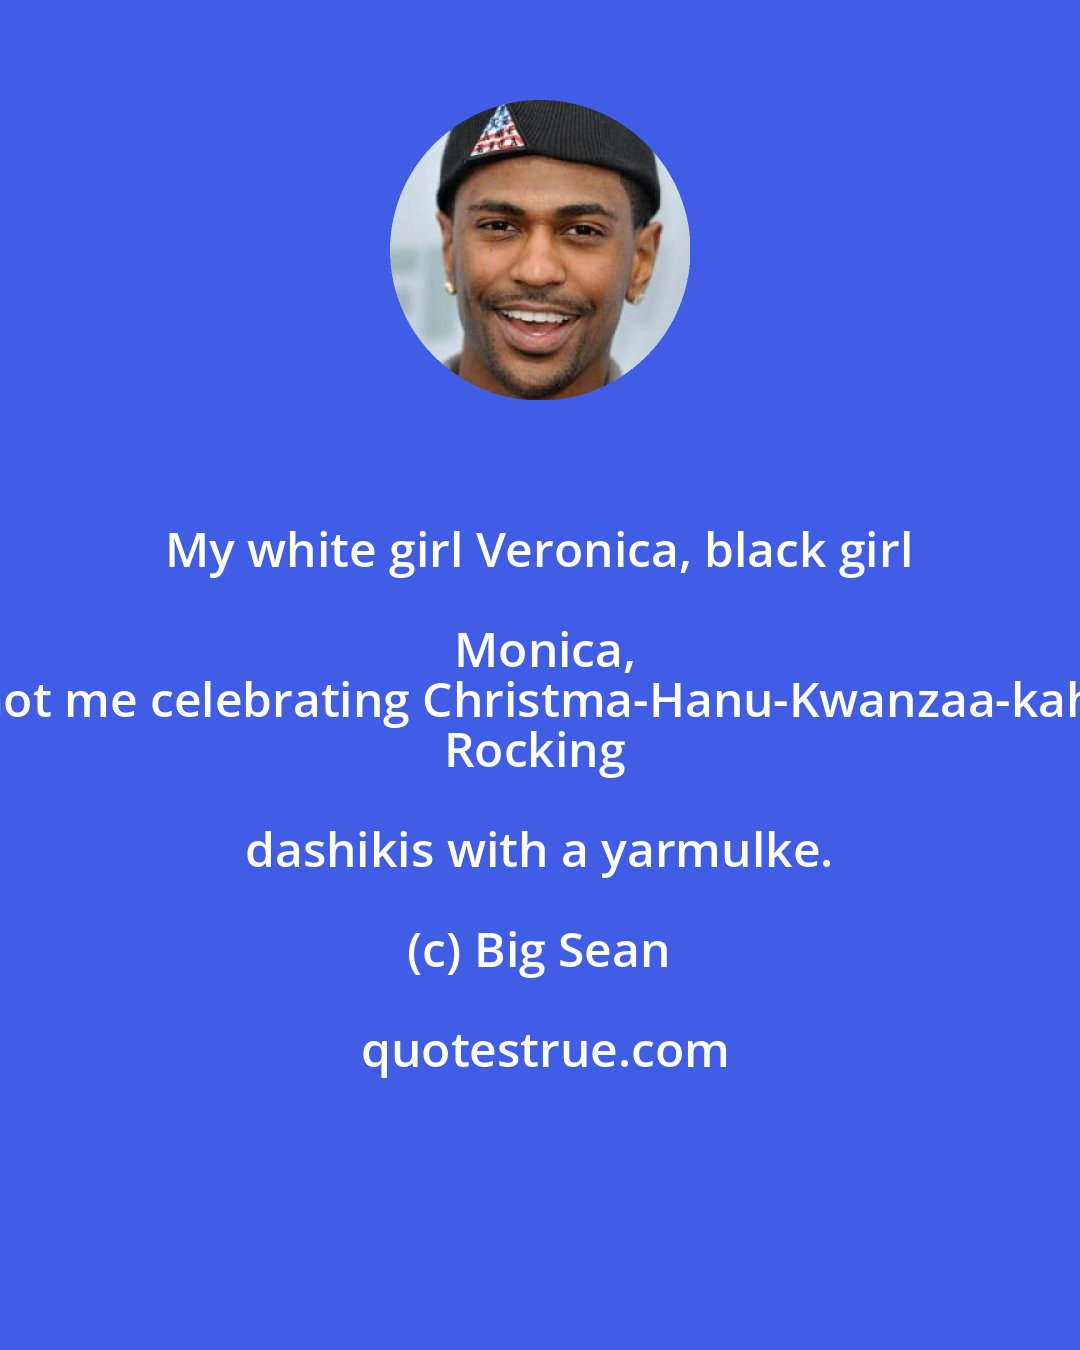 Big Sean: My white girl Veronica, black girl Monica,
Got me celebrating Christma-Hanu-Kwanzaa-kah,
Rocking dashikis with a yarmulke.